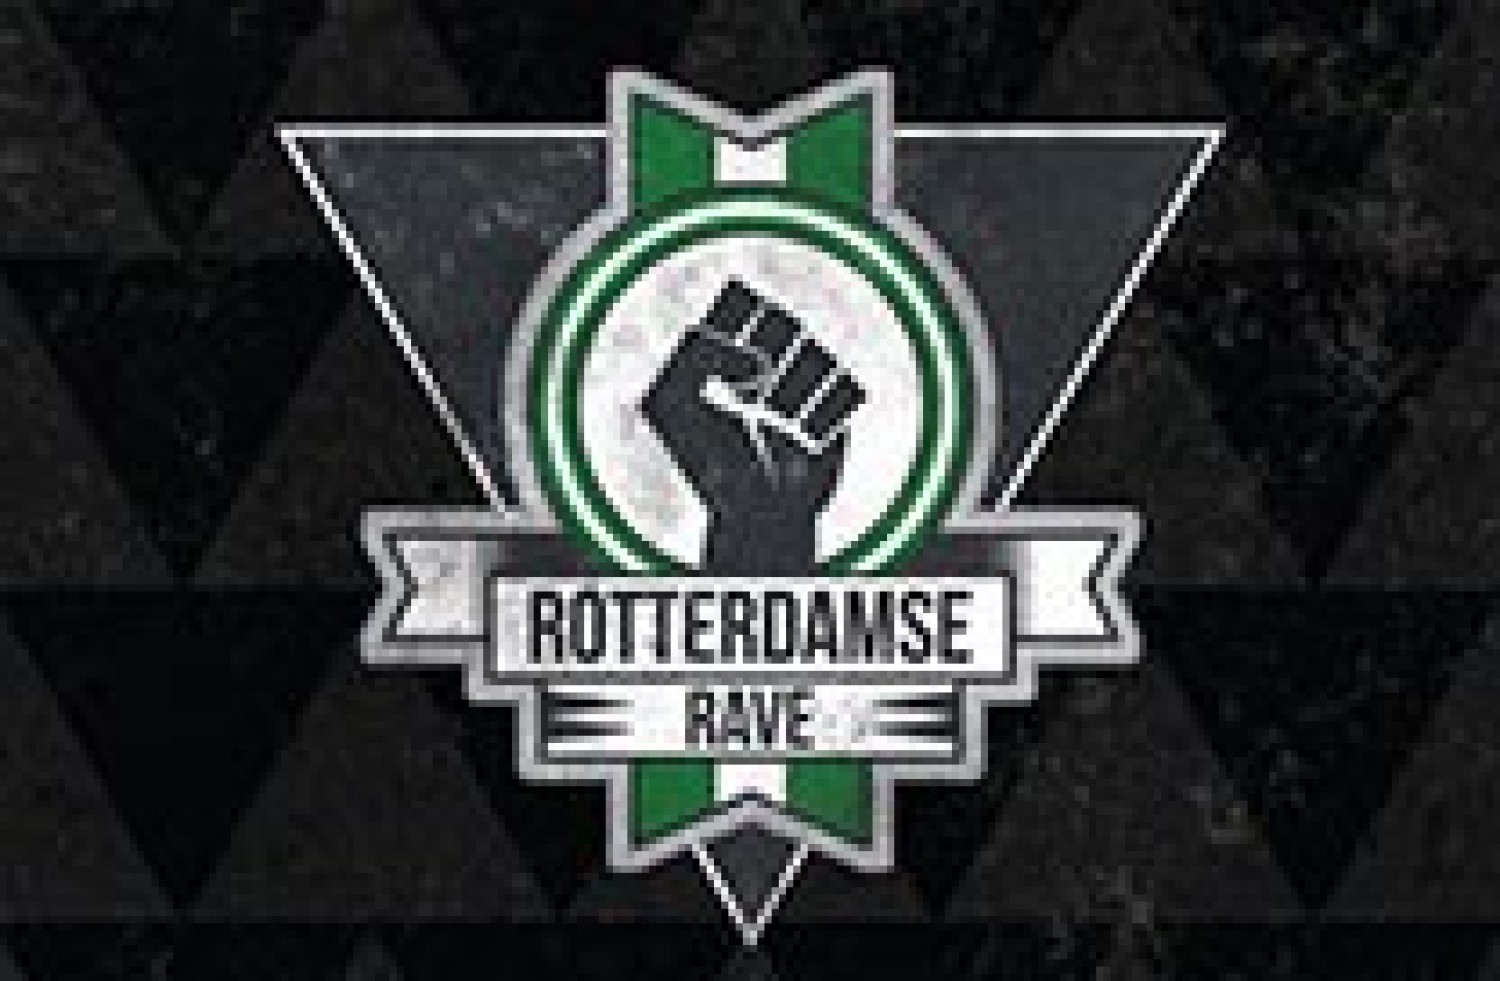 Party report: Rotterdamse Rave, Rotterdam (27-11-2015)